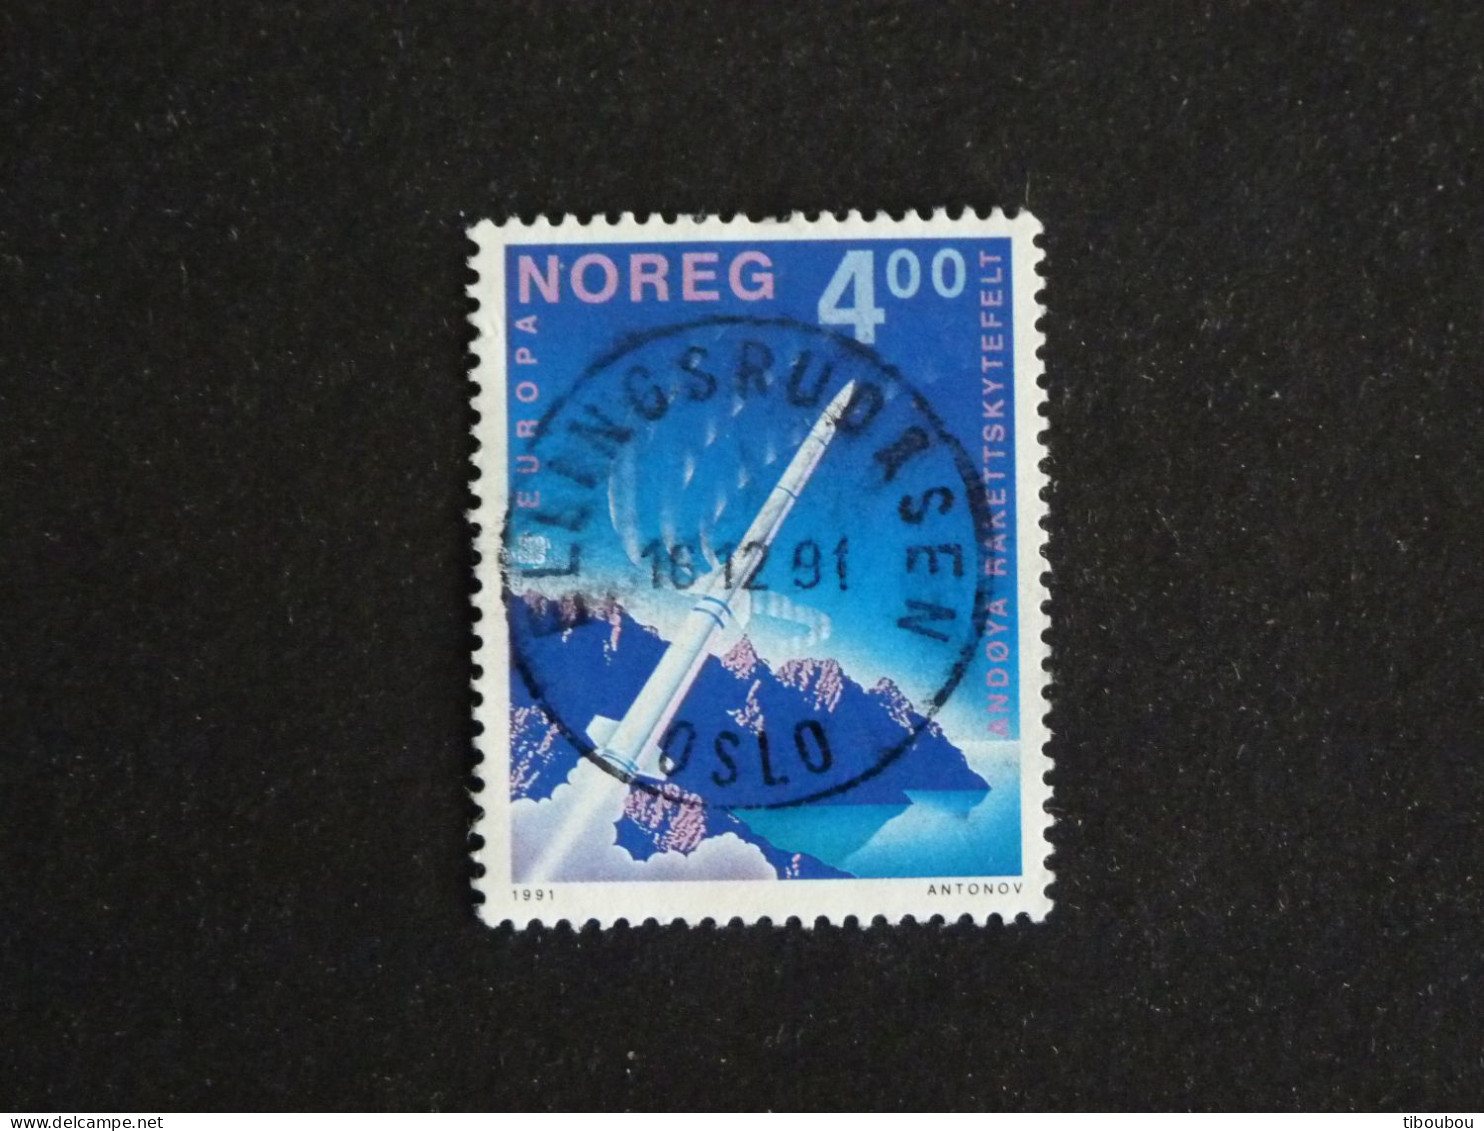 NORVEGE NORWAY NORGE NOREG YT 1020 OBLITERE - EUROPA BASE LANCEMENT ANDÖYA FUSEE - Gebraucht